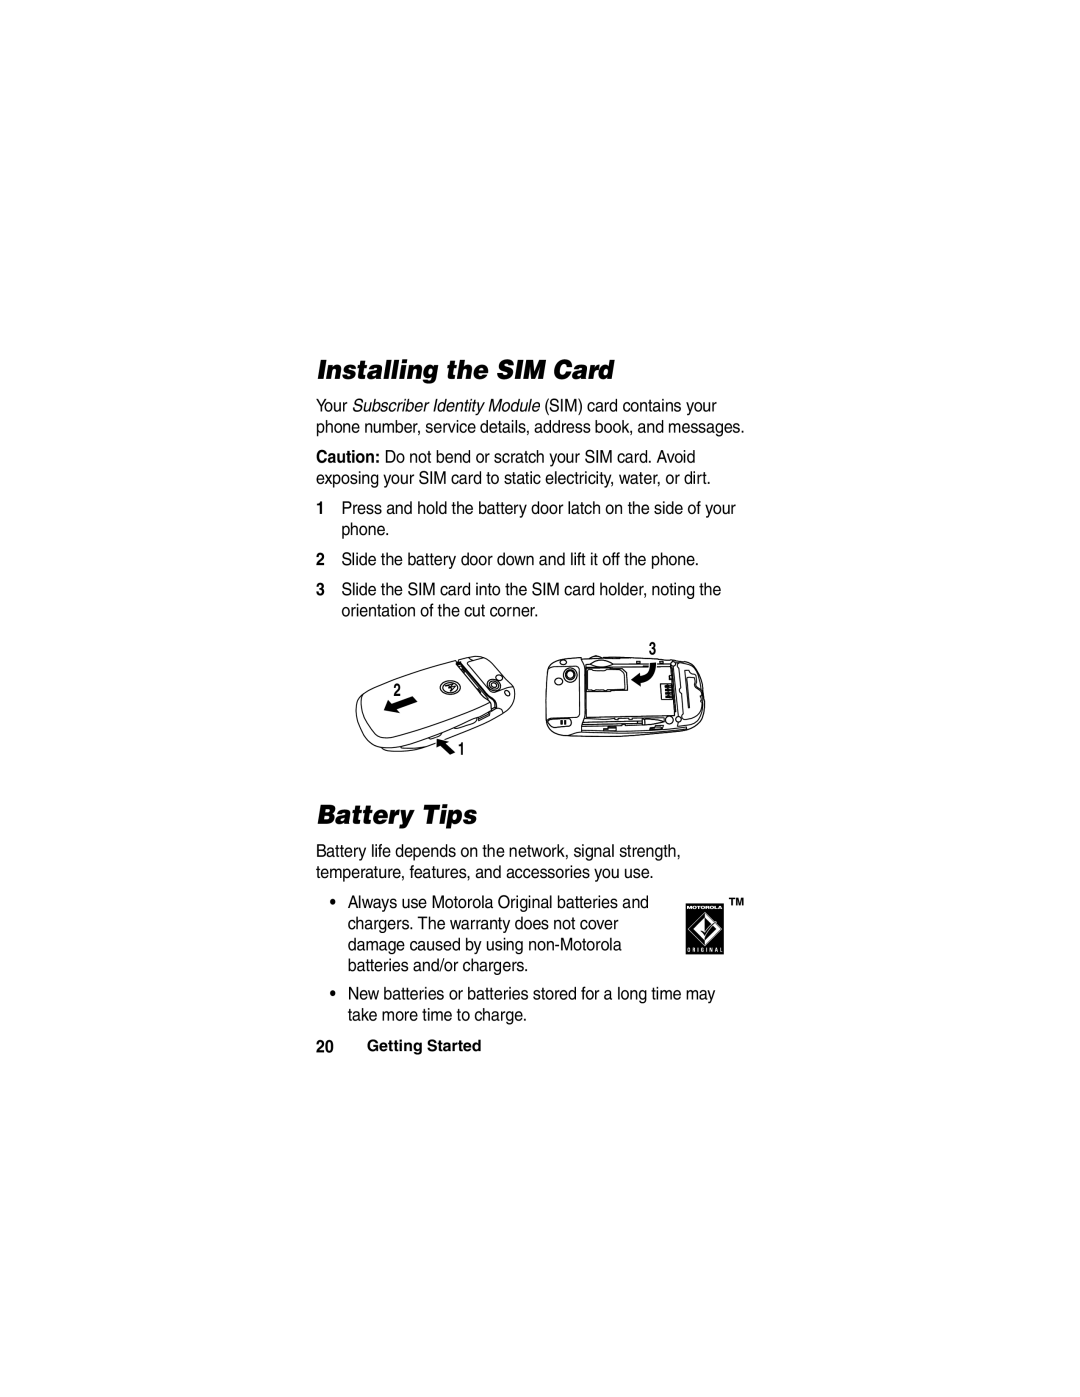 Motorola A780 manual Installing the SIM Card, Battery Tips 